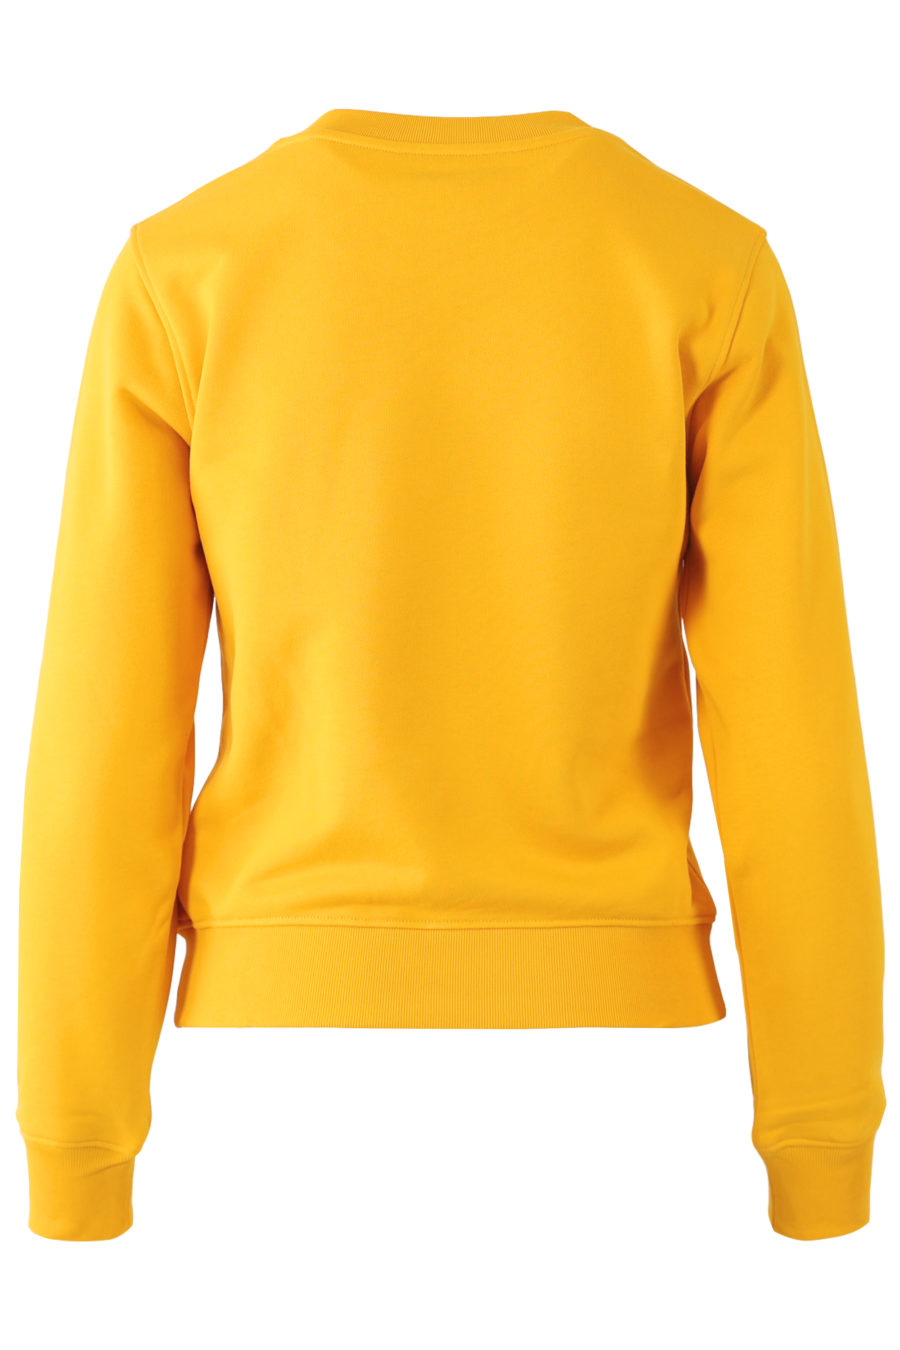 Orangefarbenes Sweatshirt mit schwarzem Logo - IMG 7185 copy